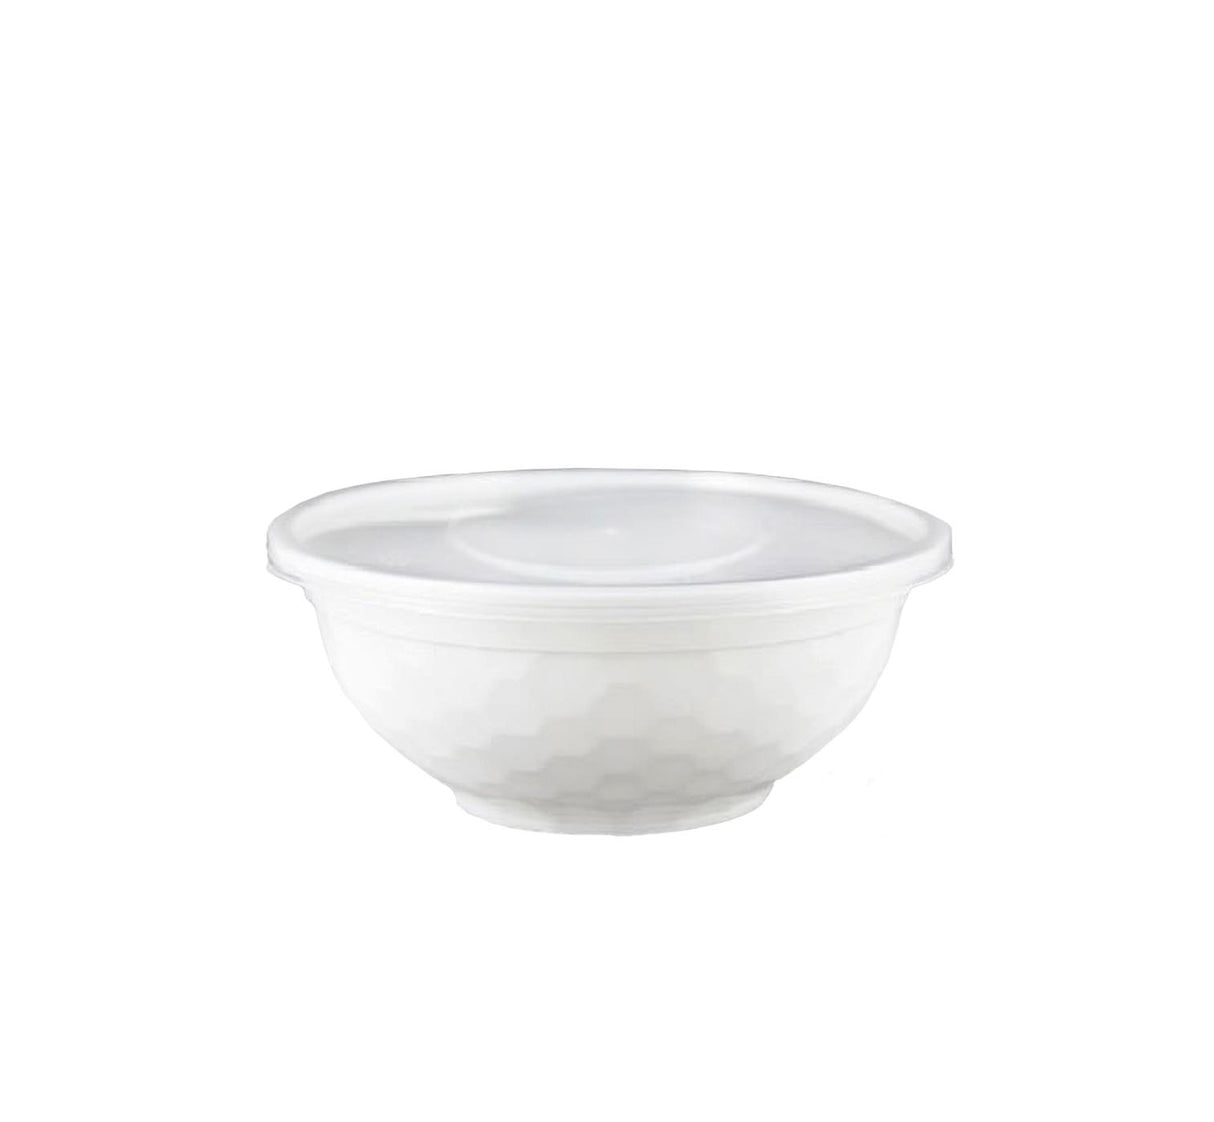 HS-360 | 12oz White PP Diamond Shape Bowl (Bowl Only)  - 1000 Pcs